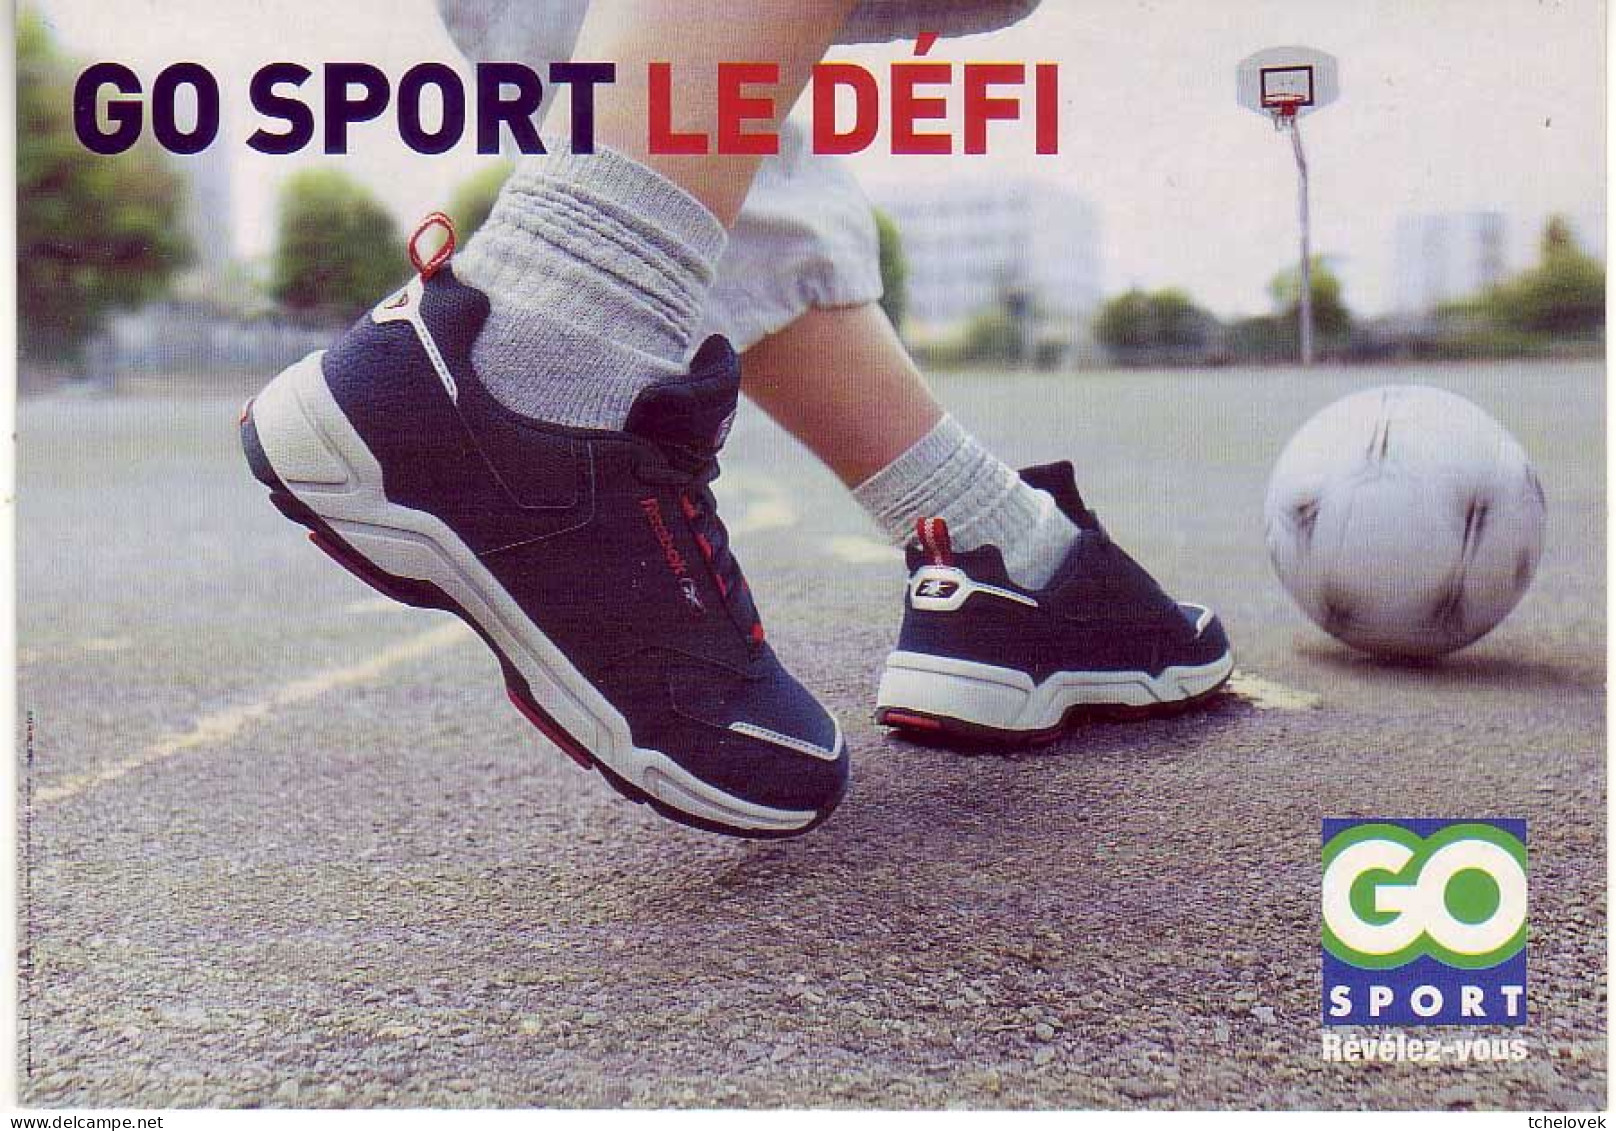 Thèmes. Sports. Basket Ball & Volley Ball. Rouen 2013 & Go Sport Le Defi - Volleyball